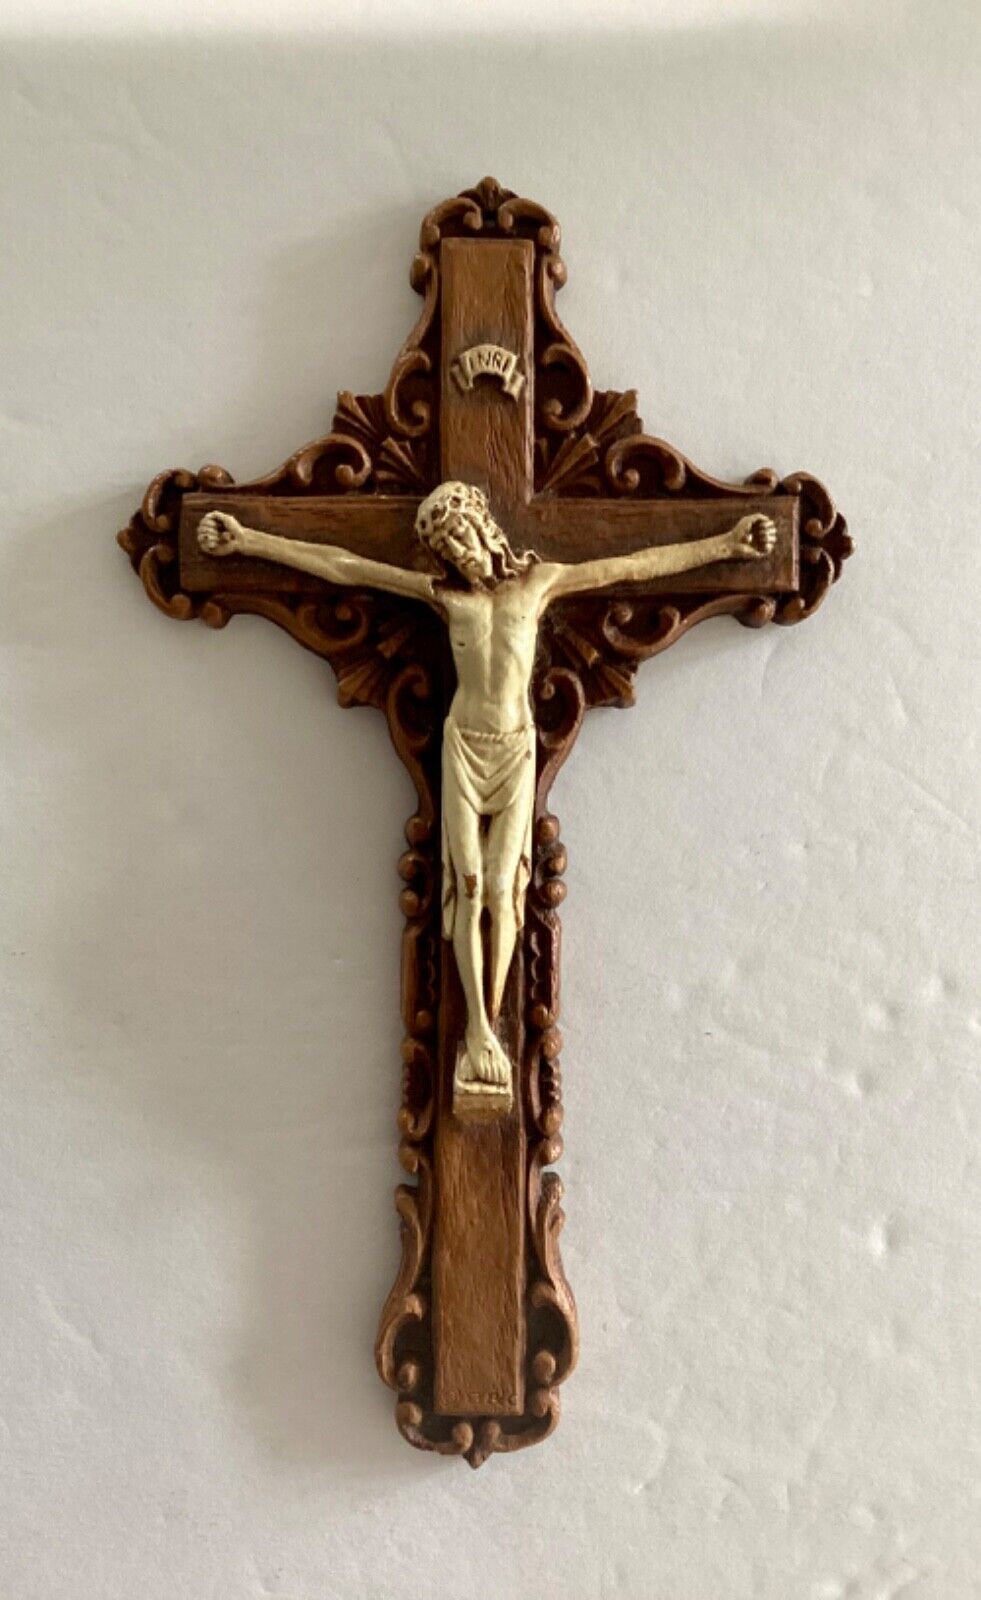 Vintage Boynton & Co Barwood Religious Crucifix Cross - 7 Inch Wall Hanging